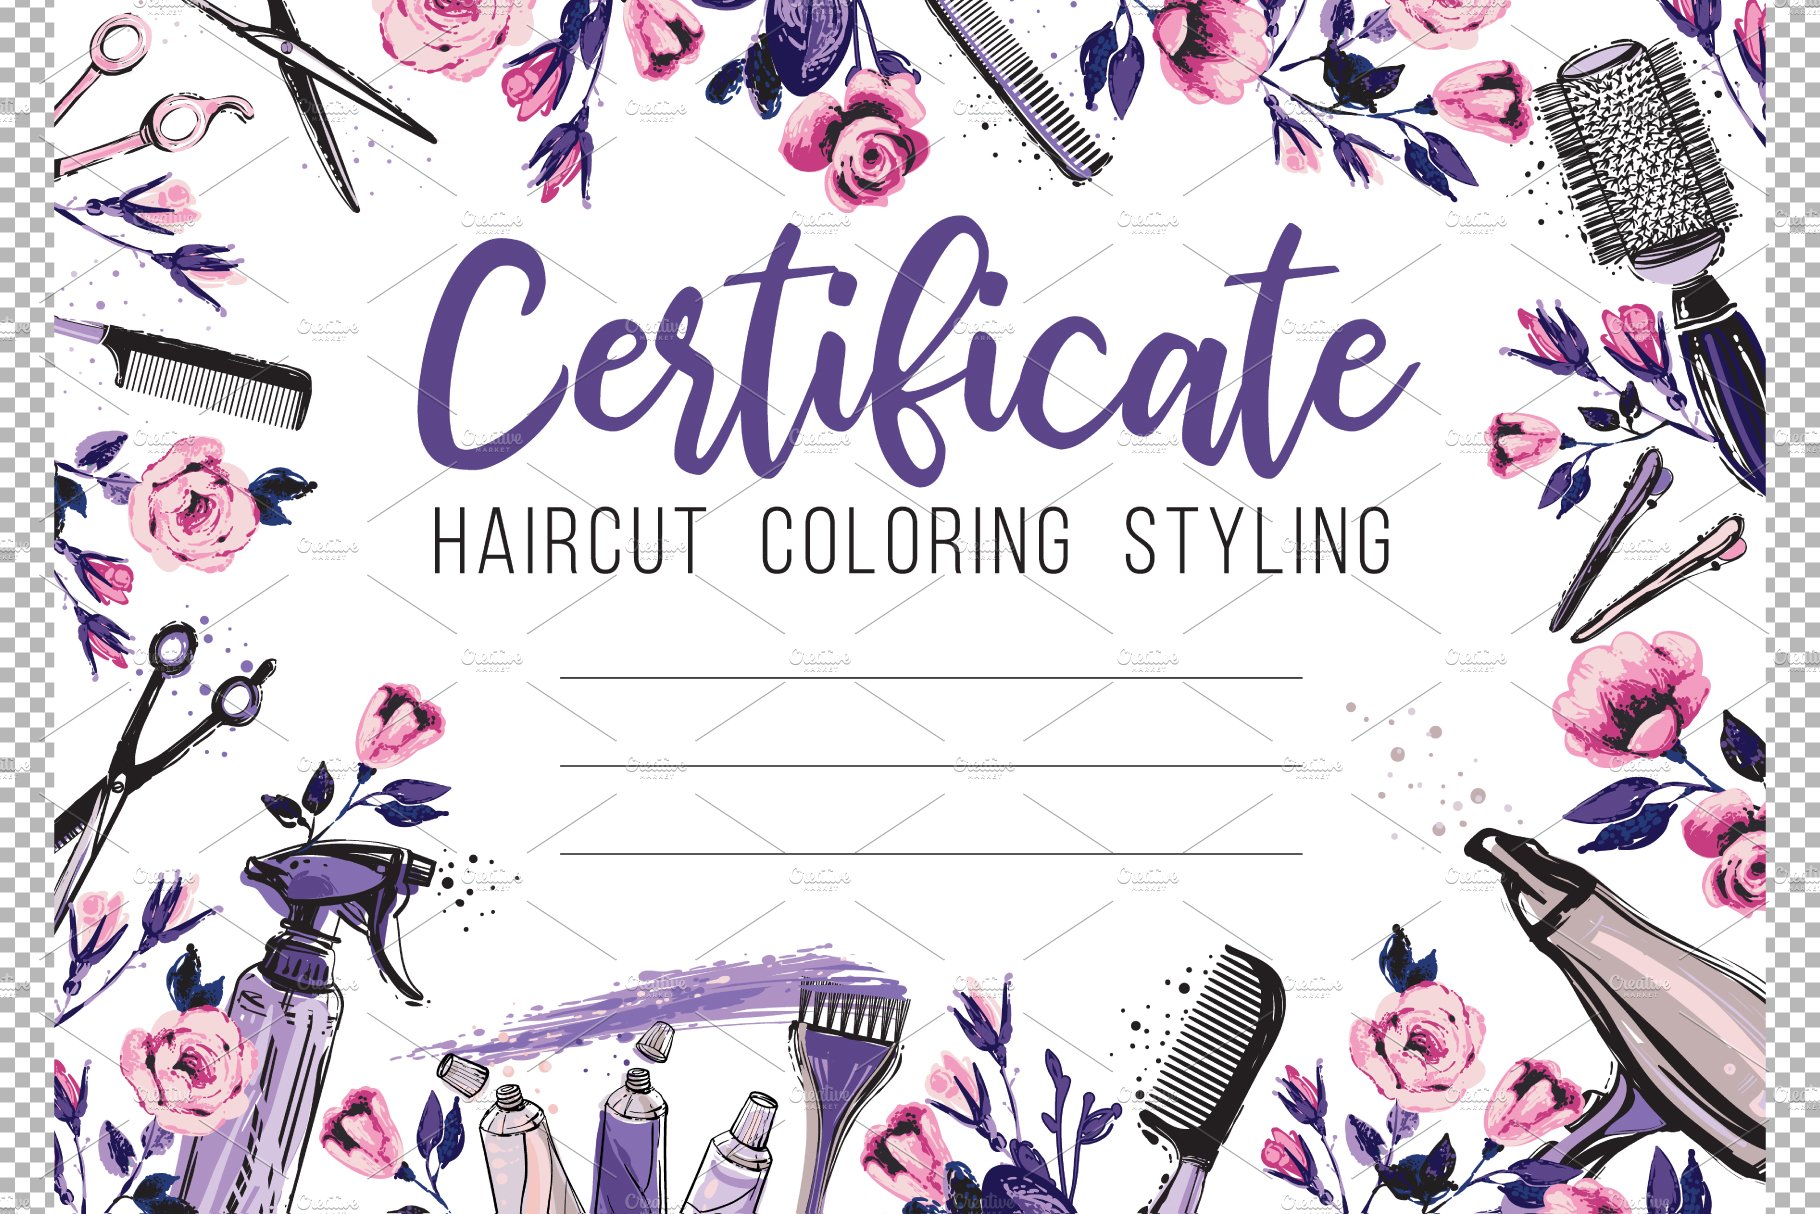 hair salon gift certificate template